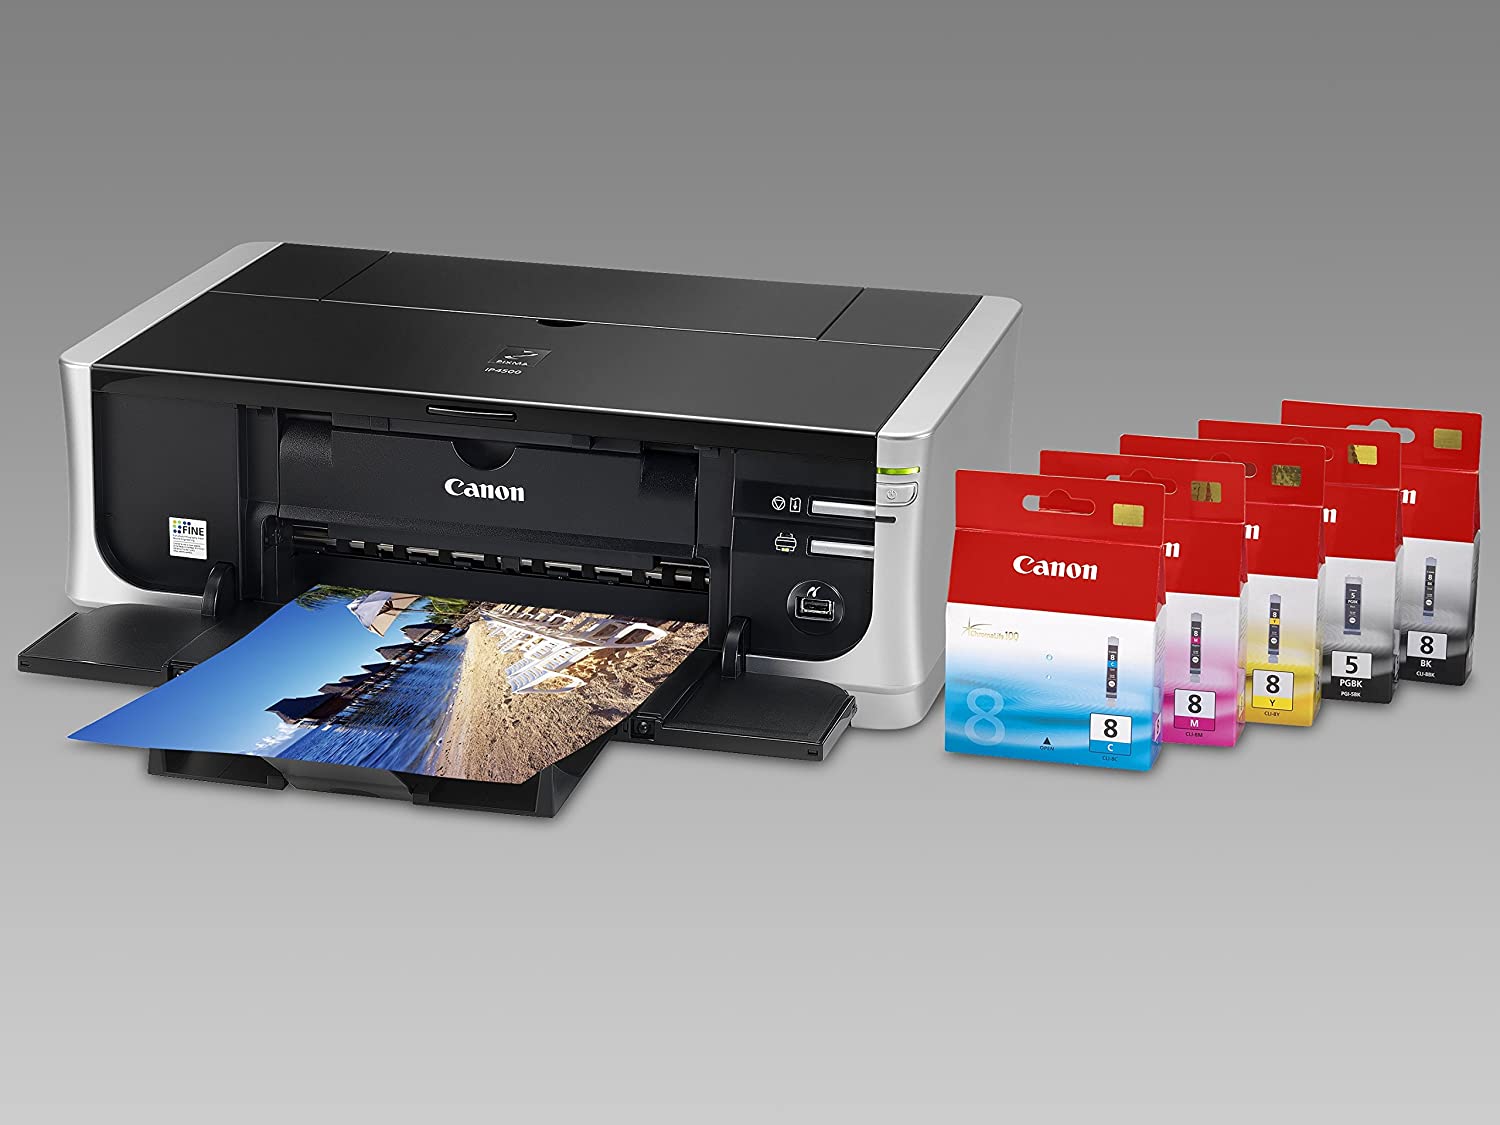 Canon Ip4500 Cd Label Print Software Mac - specialistgreat